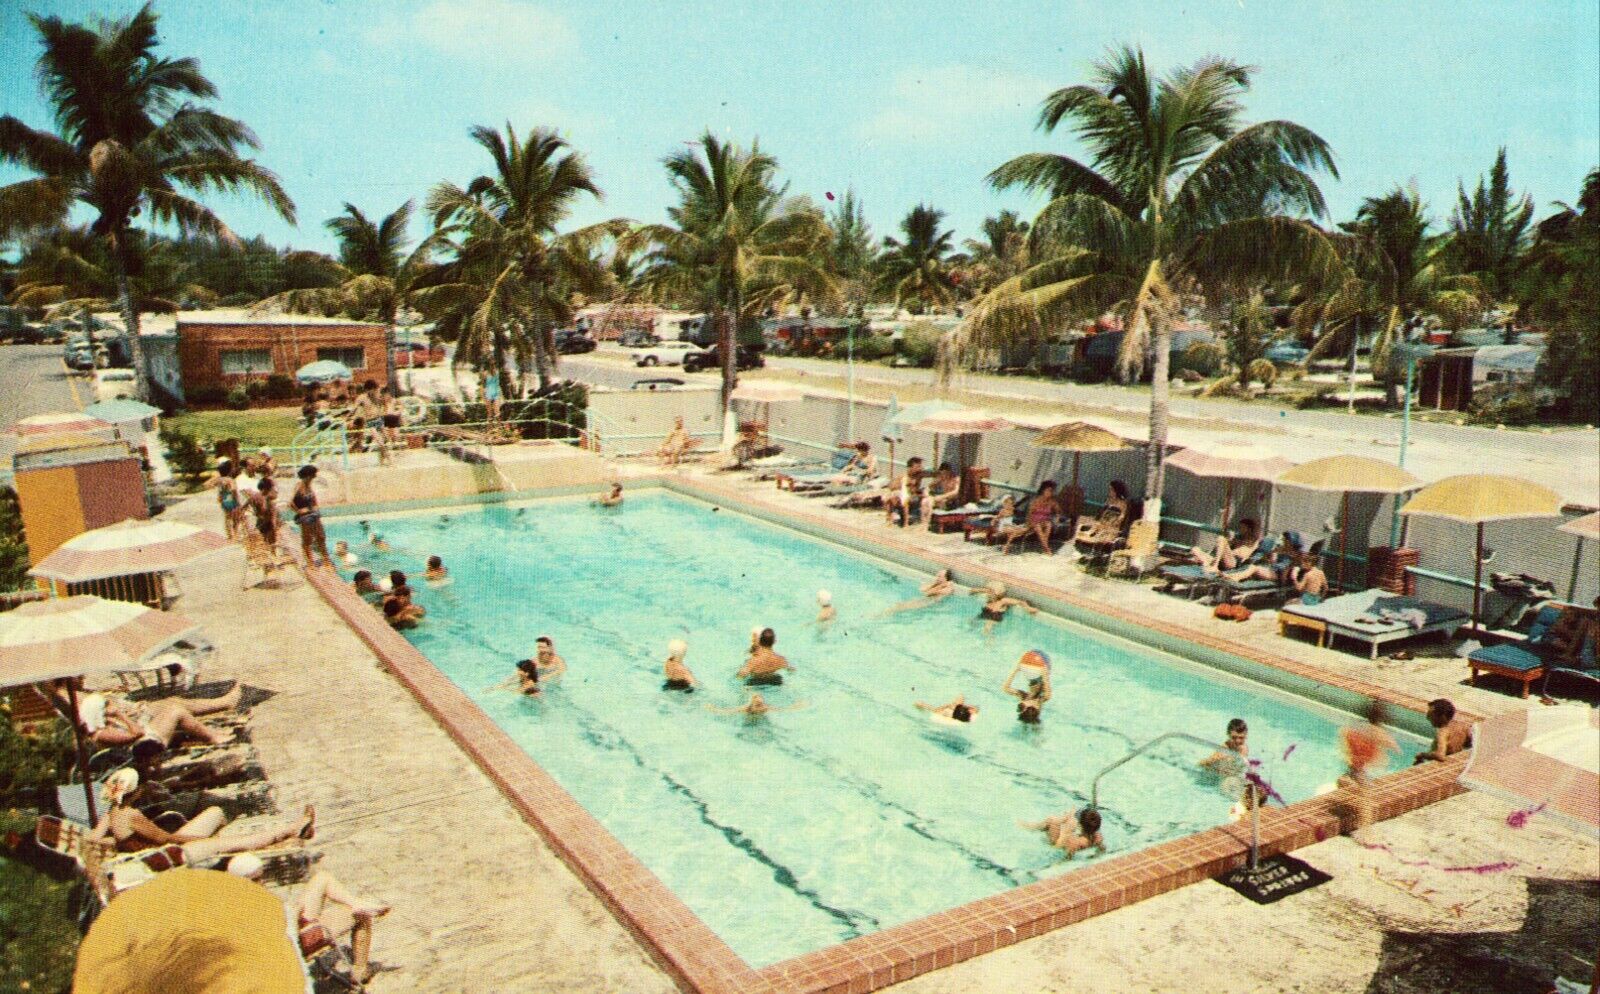 Swimming Pool, The Rancher - North Miami, Florida - Vintage Postcard